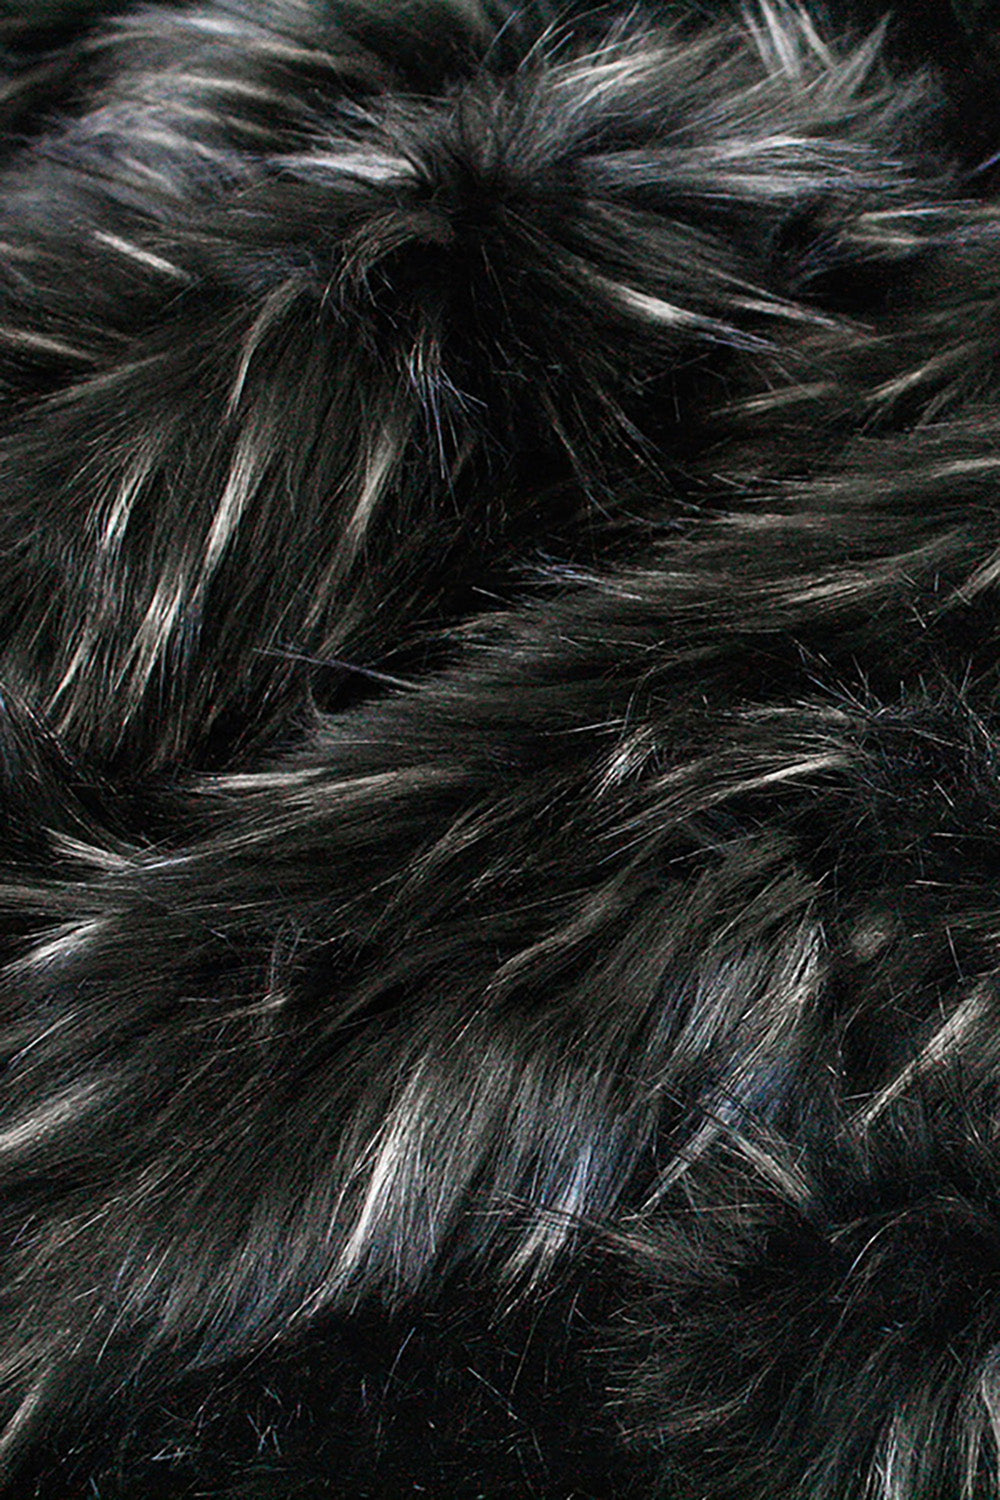 Imitation fake fur throw - Heirloom faux fur throw and cushions  in Ebony Plume Black SKU  FEPT18